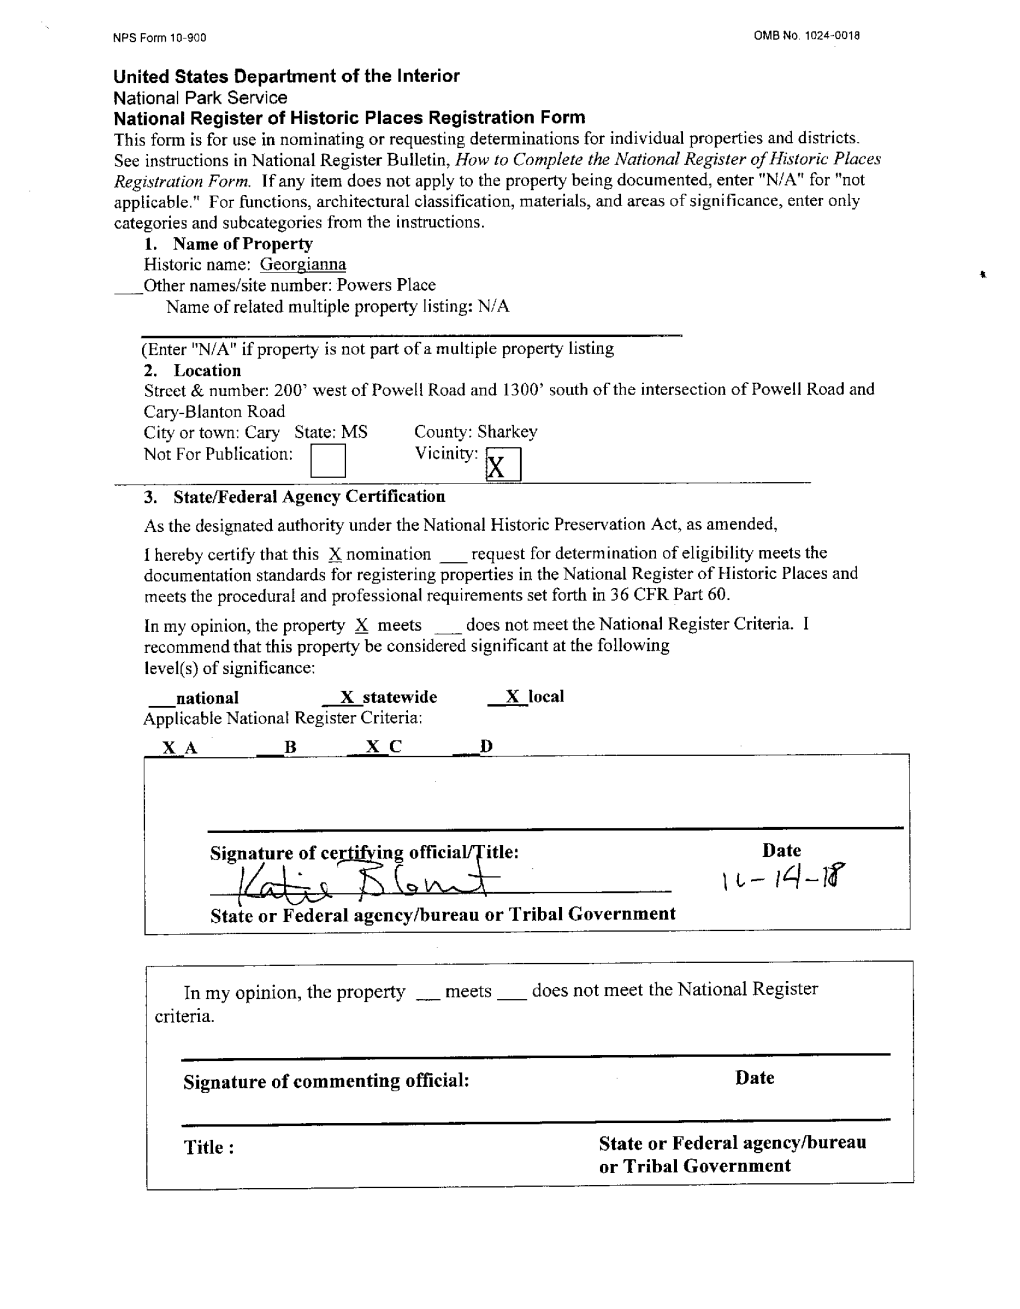 View National Register Nomination Form